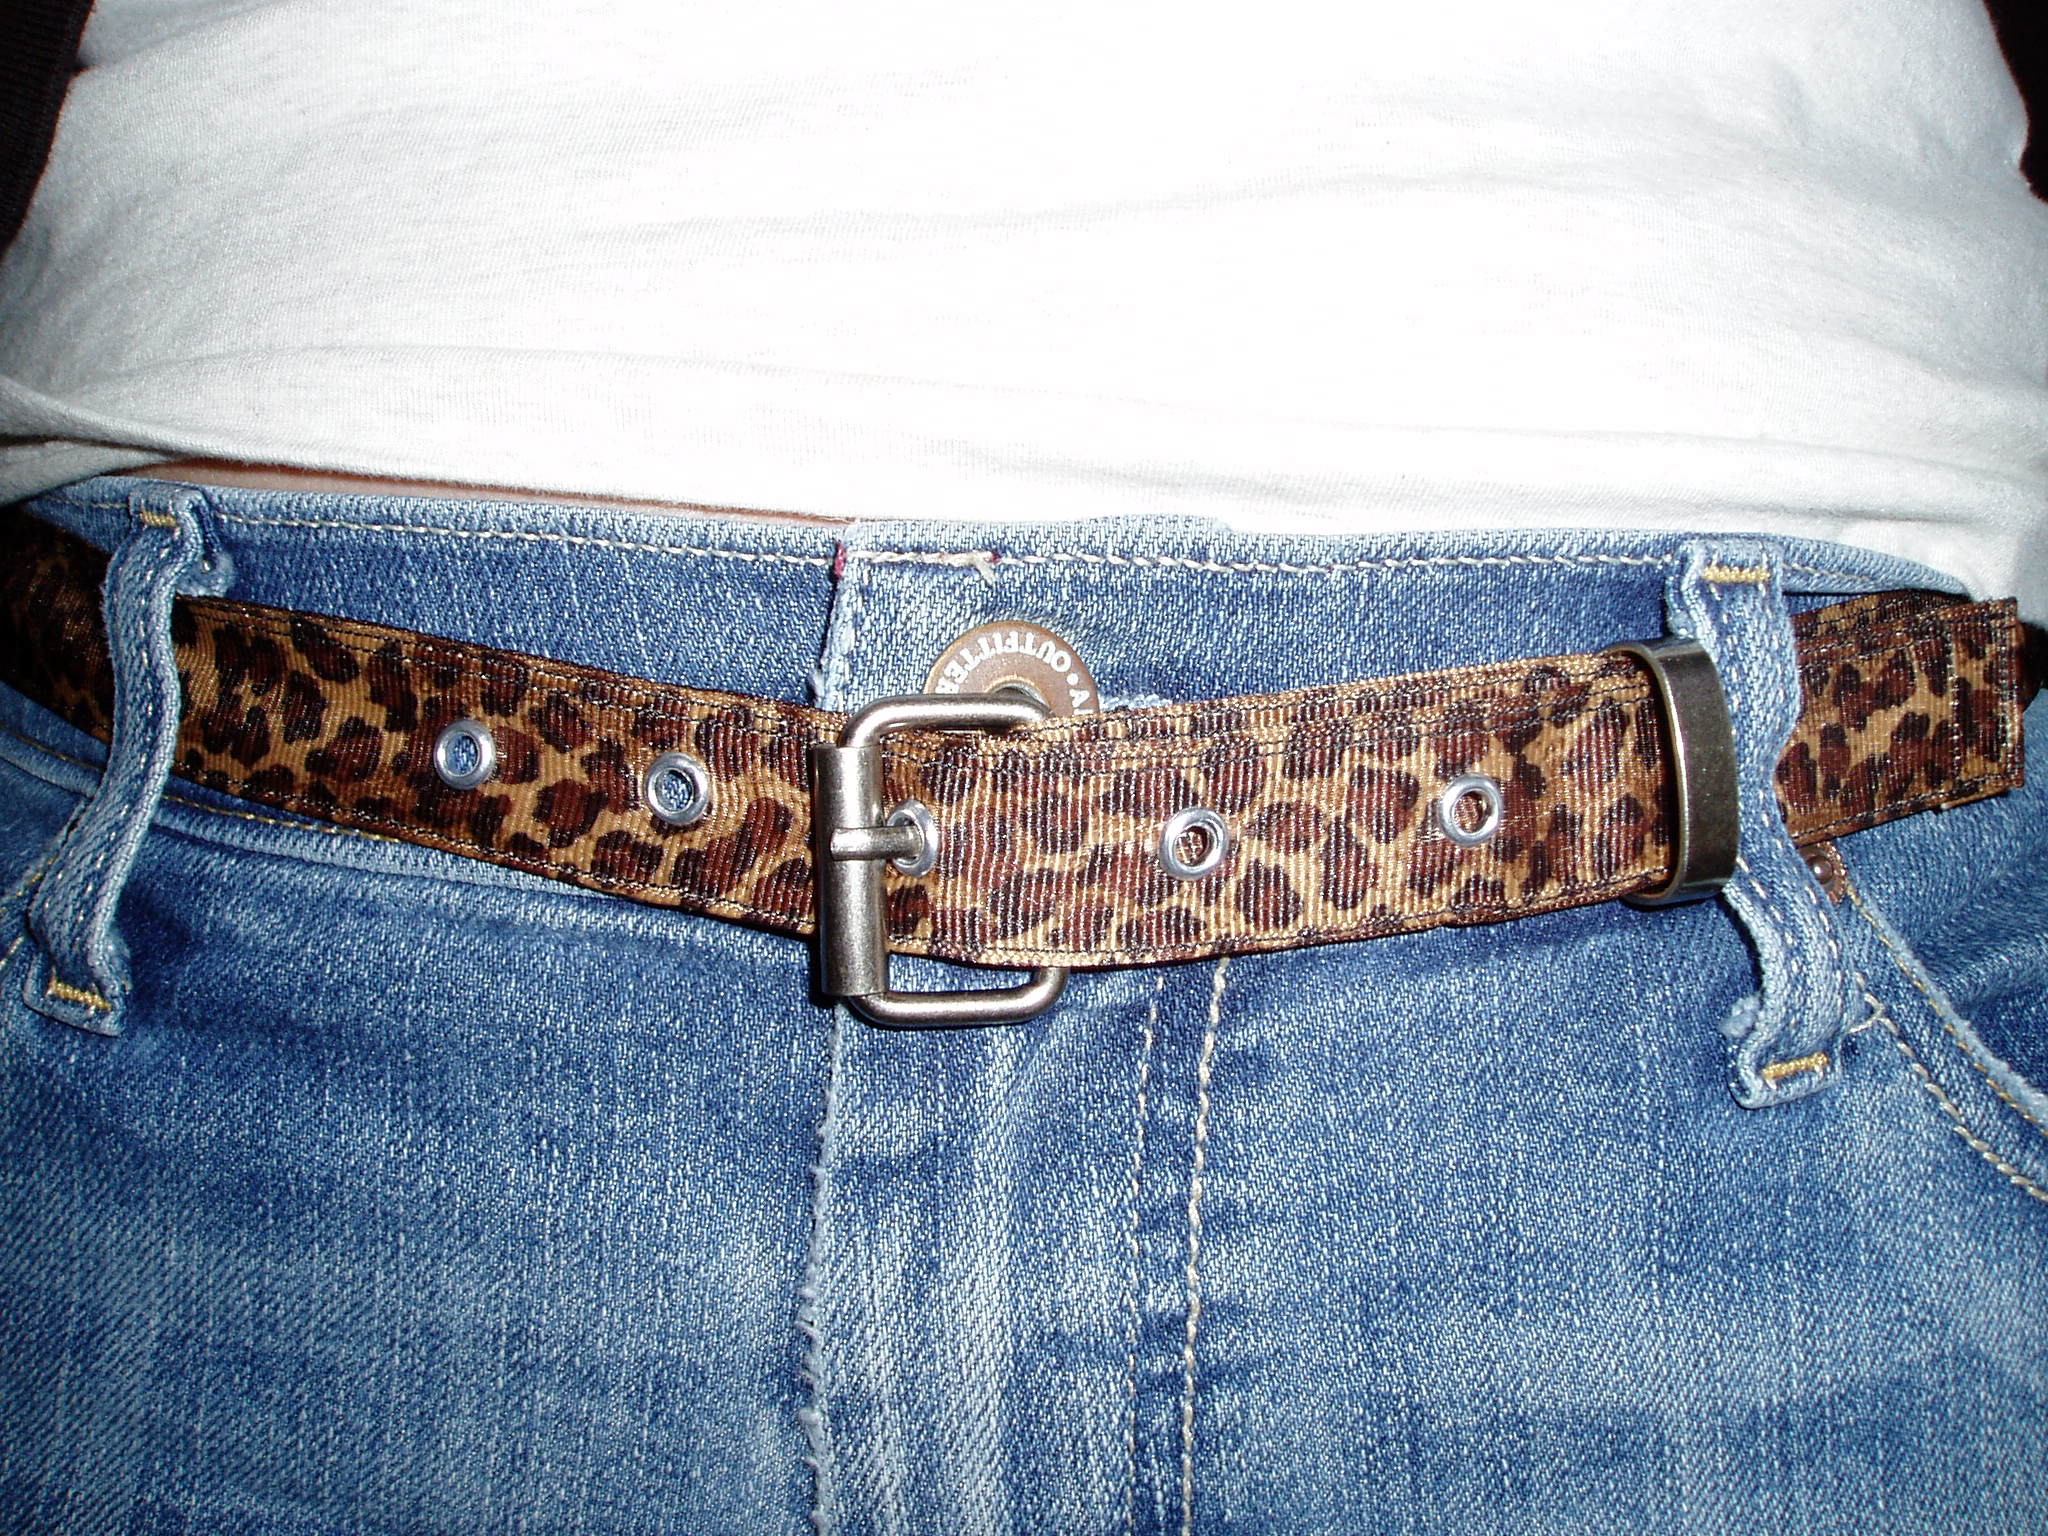 Leopard print belt on